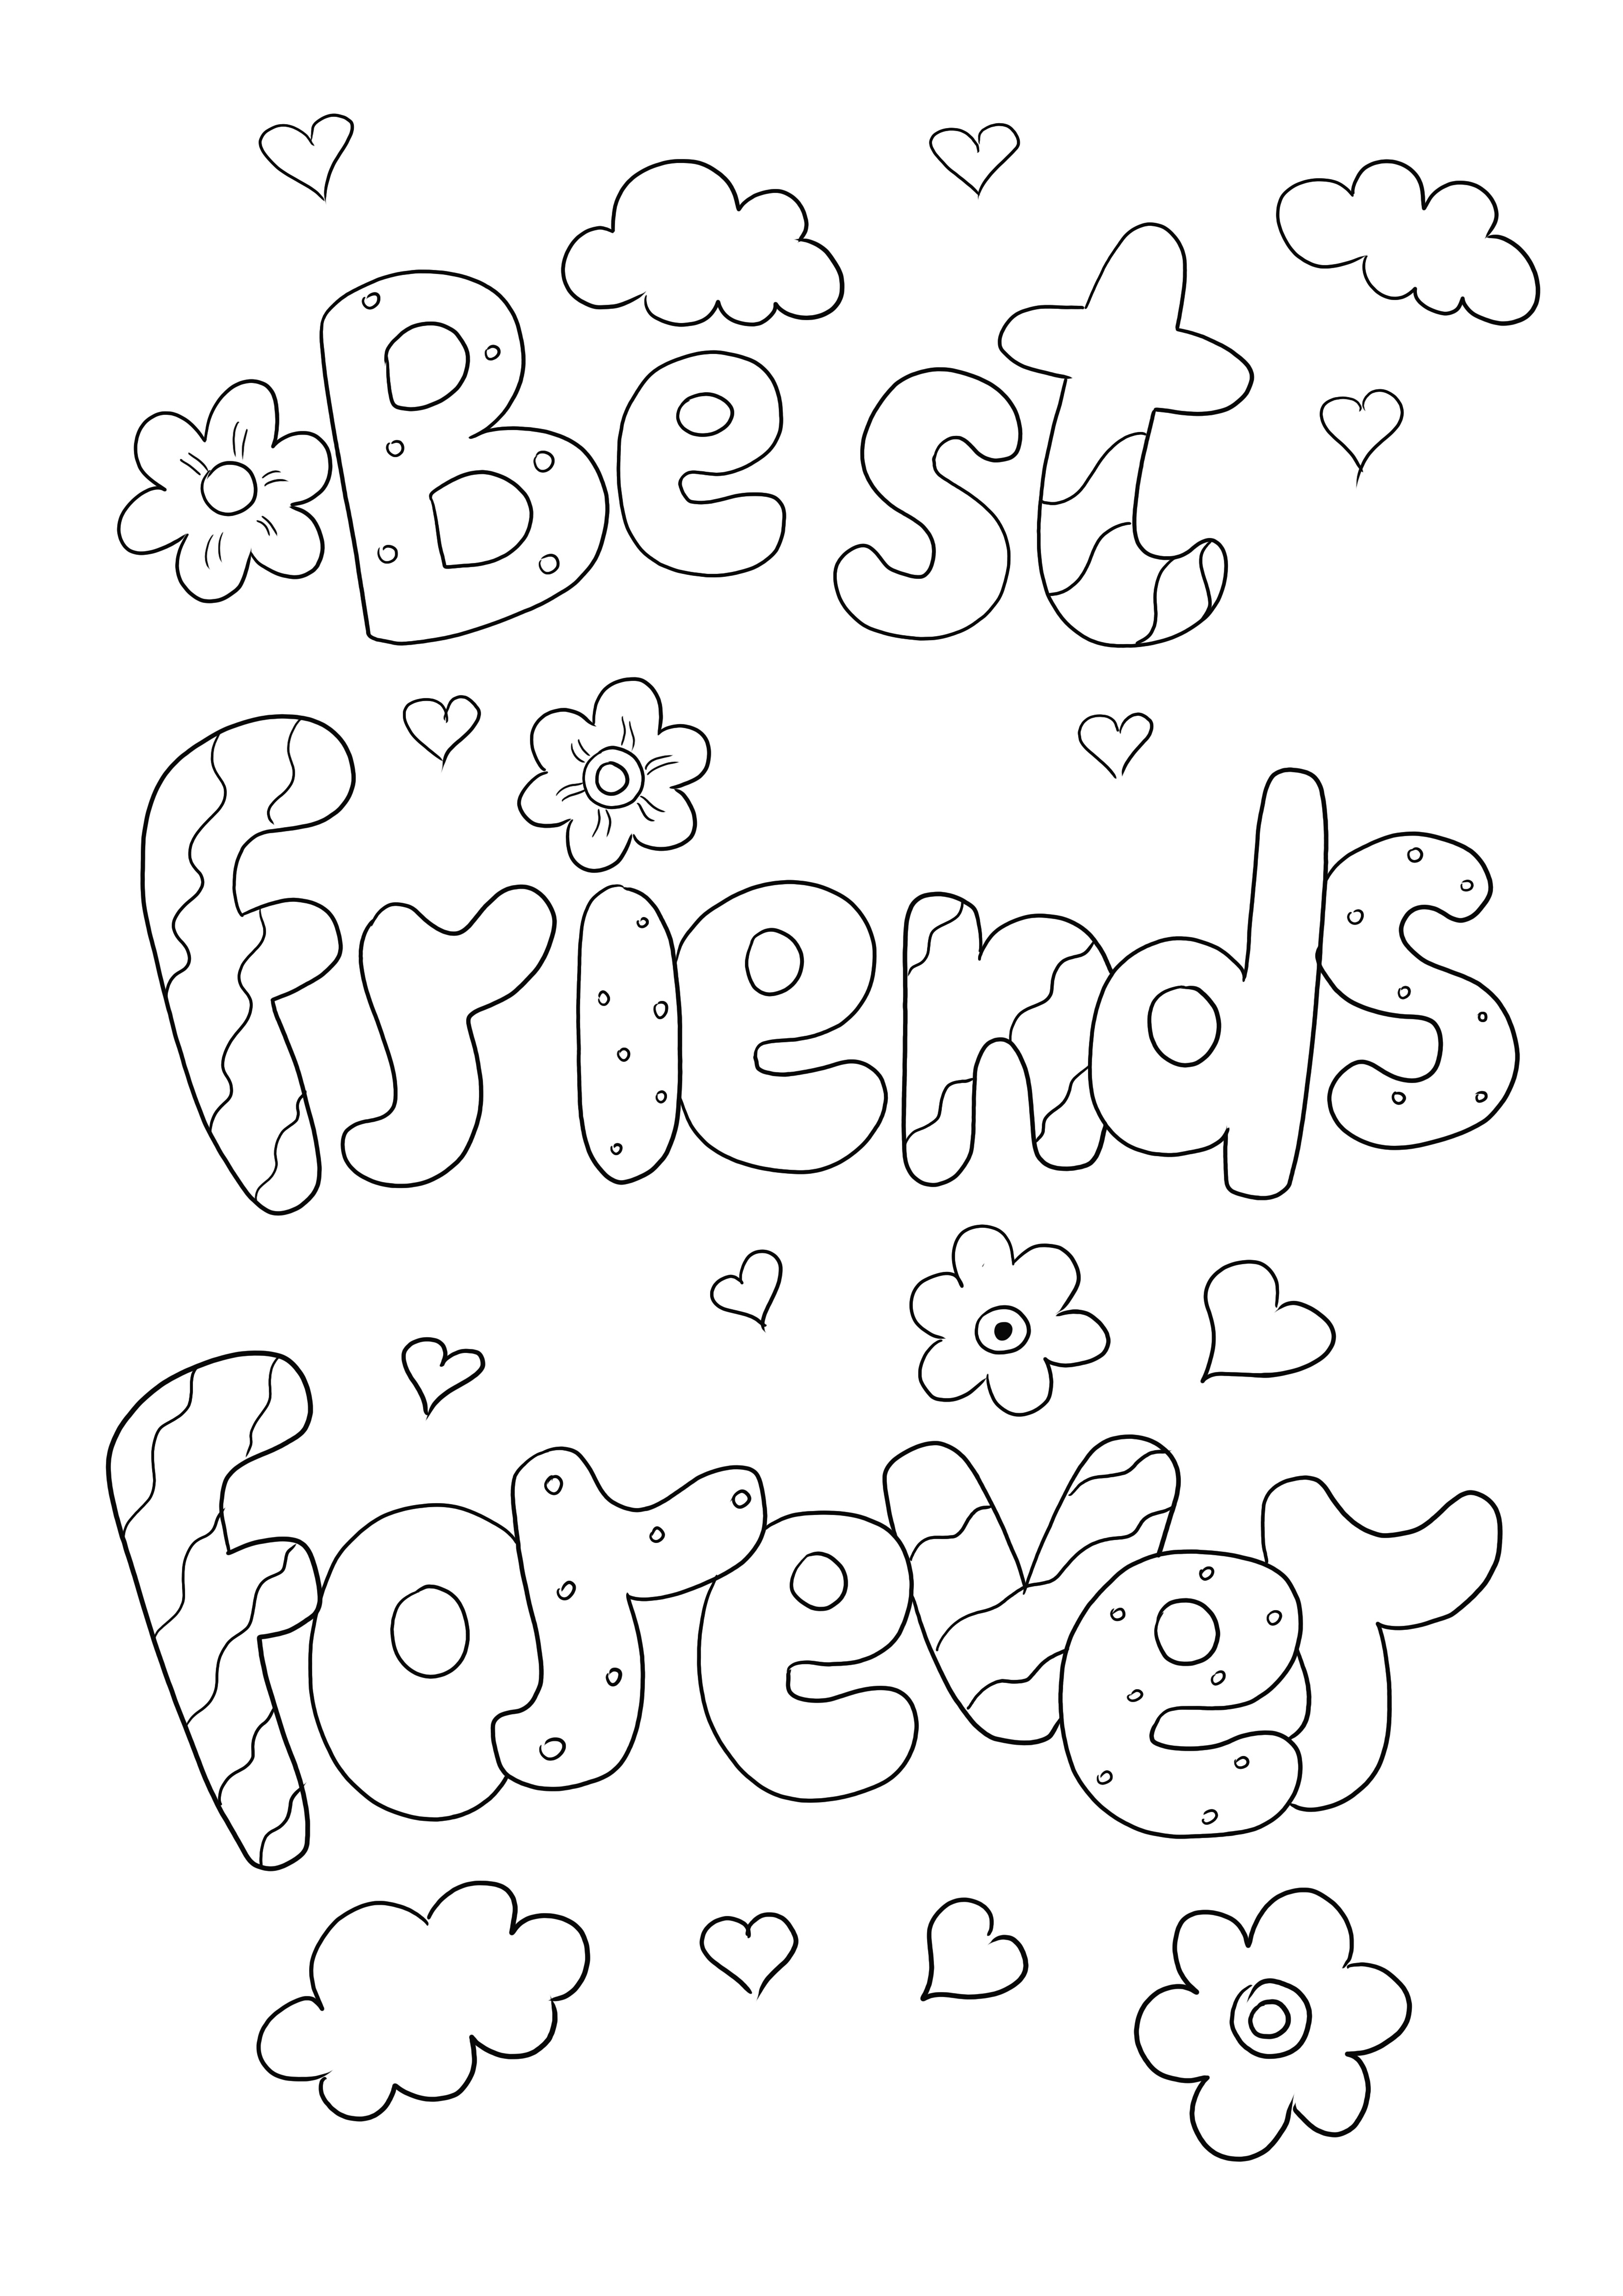 Immagine da colorare Best Friends Forever da scaricare gratuitamente o stampare direttamente